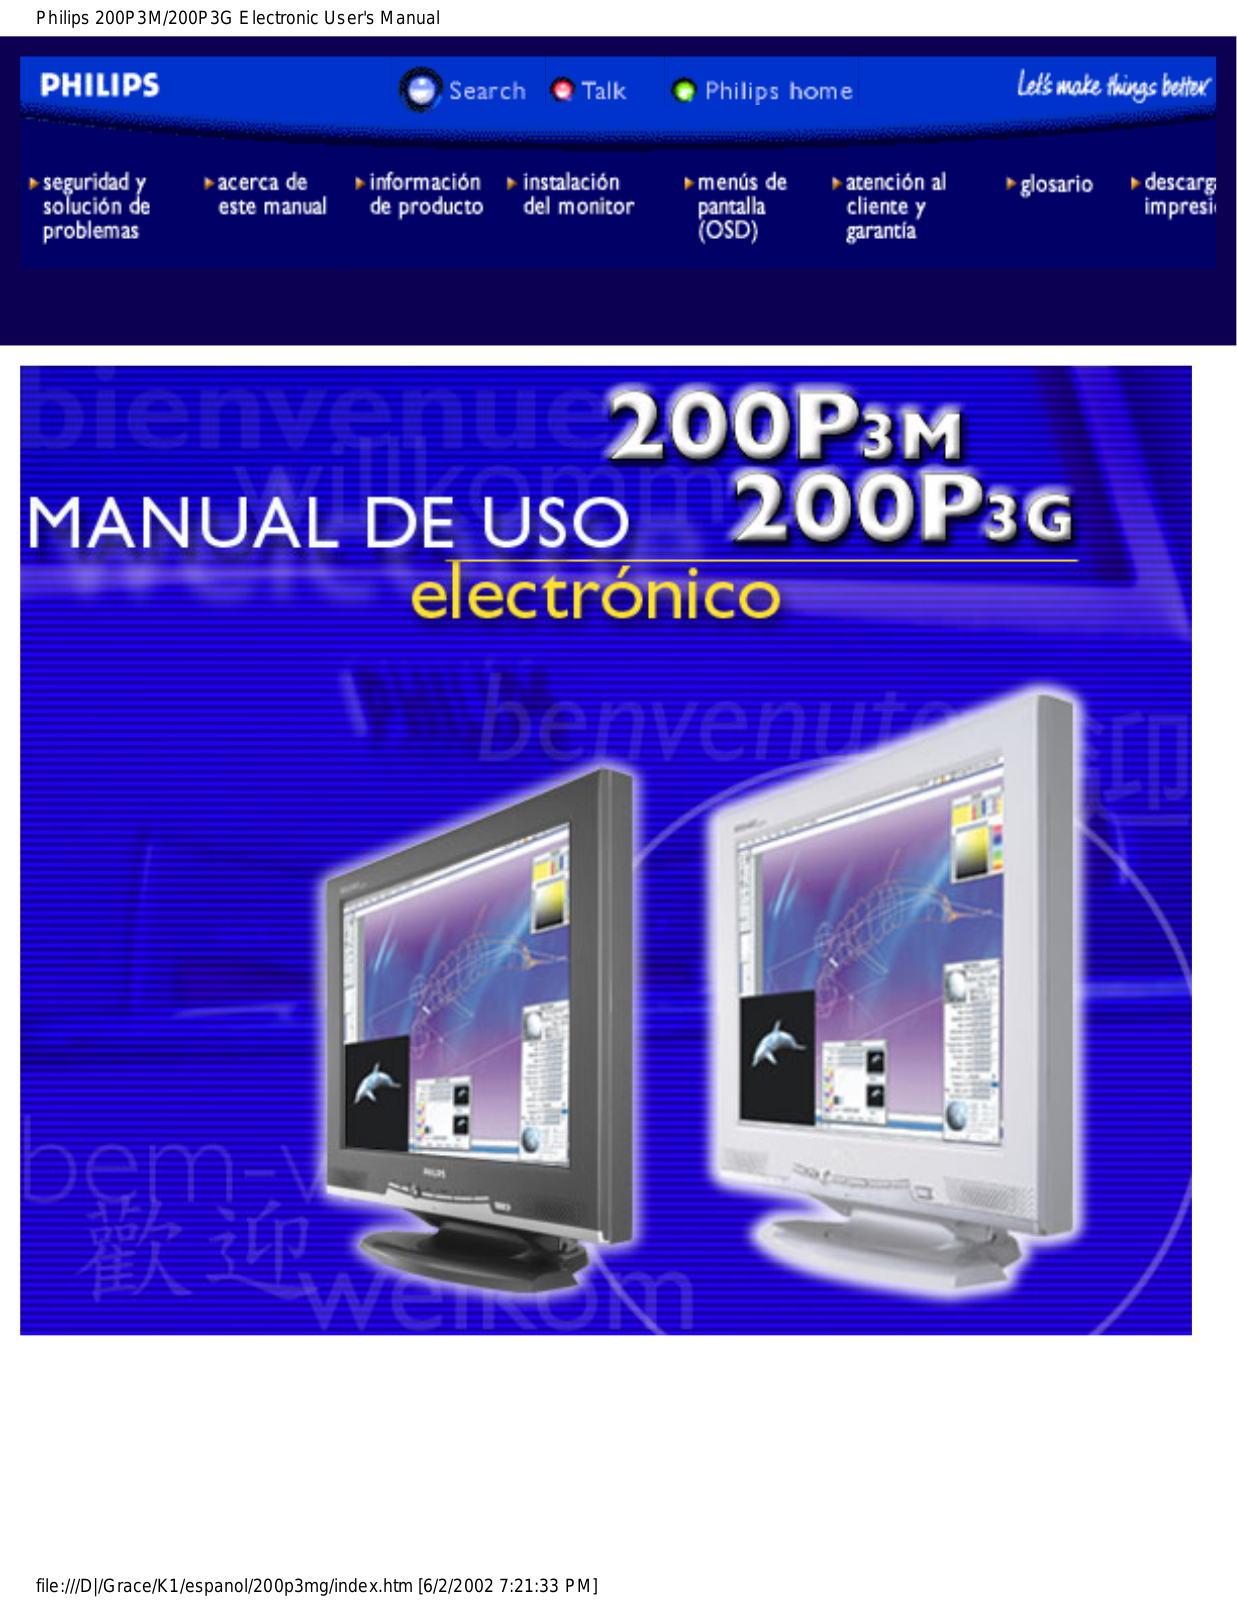 Philips 200P3M, 200P3G User Manual